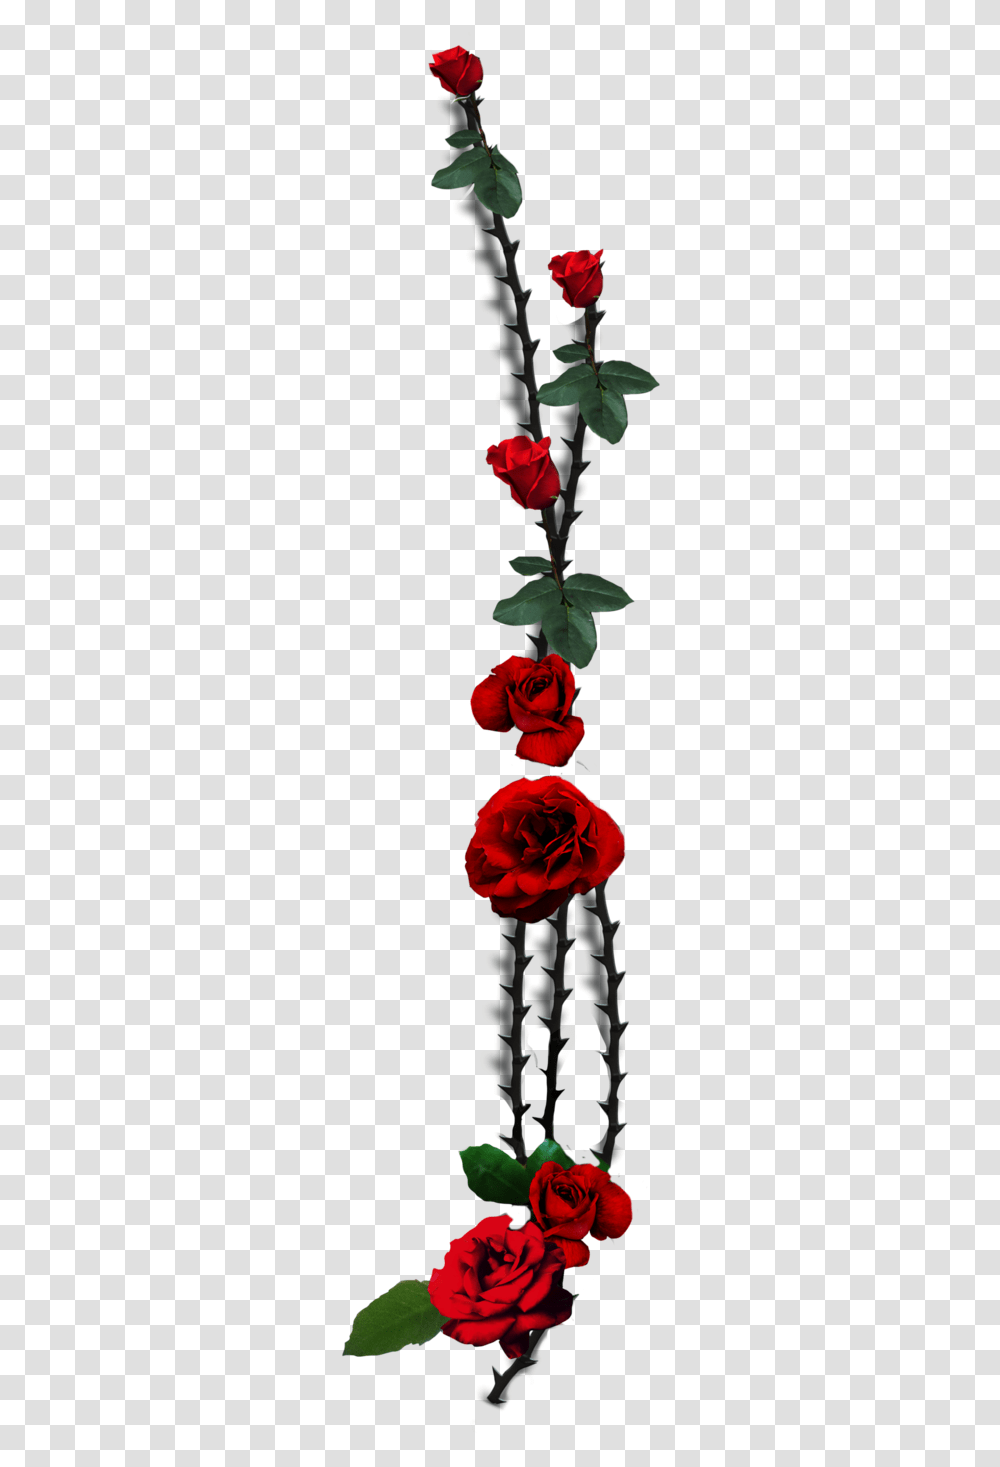 Garden Roses Thorns Spines And Prickles Plant Stem Rose Thorn, Flower, Blossom, Geranium Transparent Png